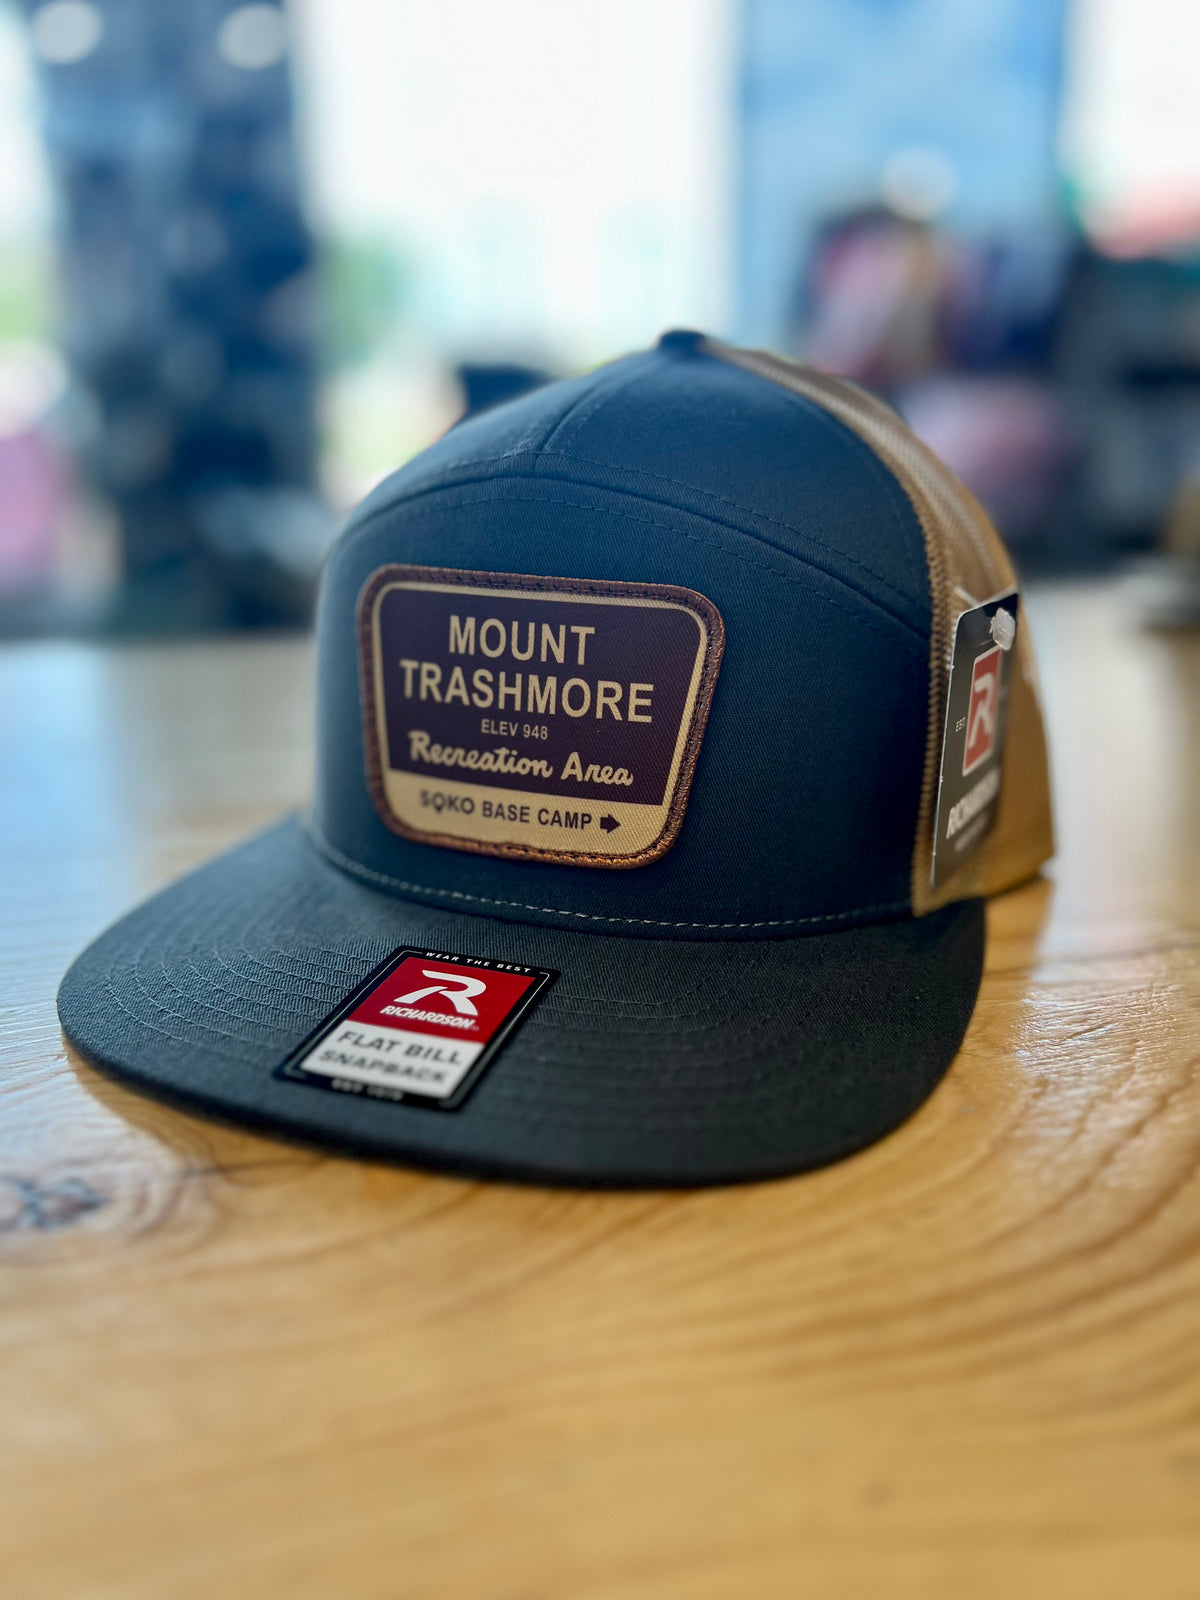 SOKO Mt Trashmore Rec Area Patch Hat